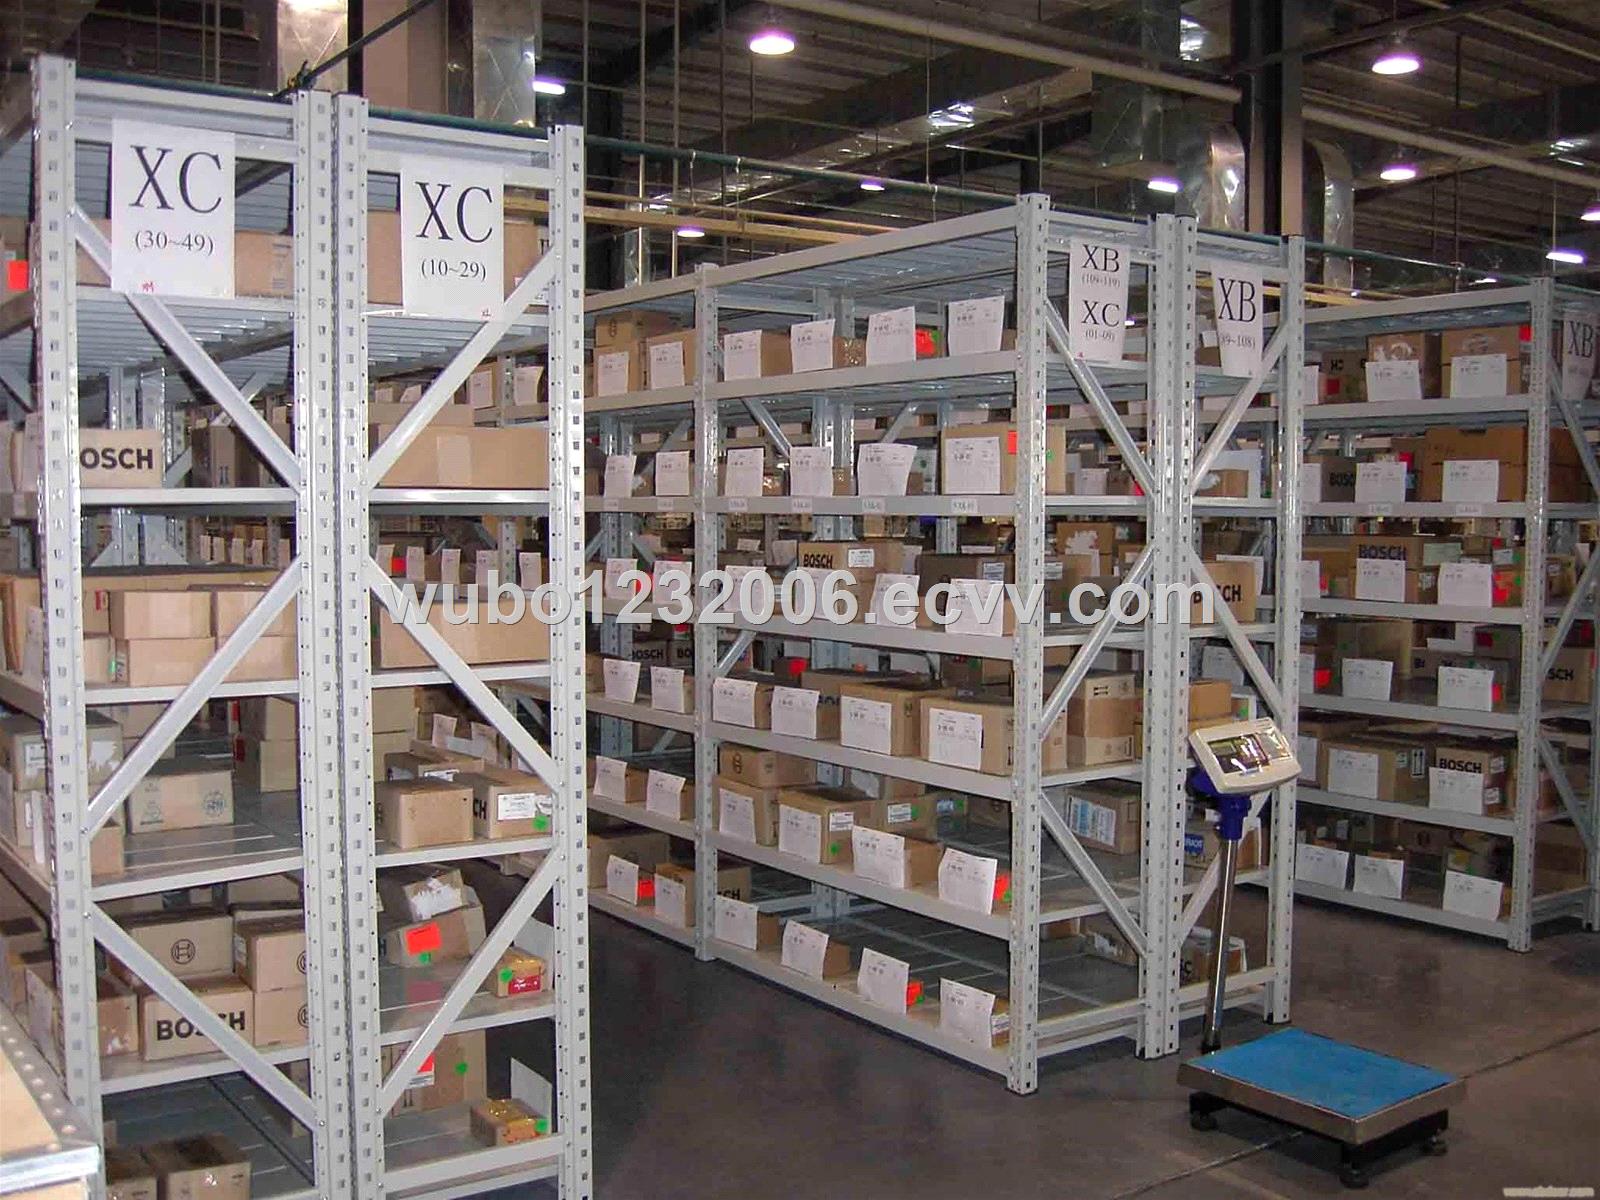 Warehouse or Supermarket rack Storage goods shelf